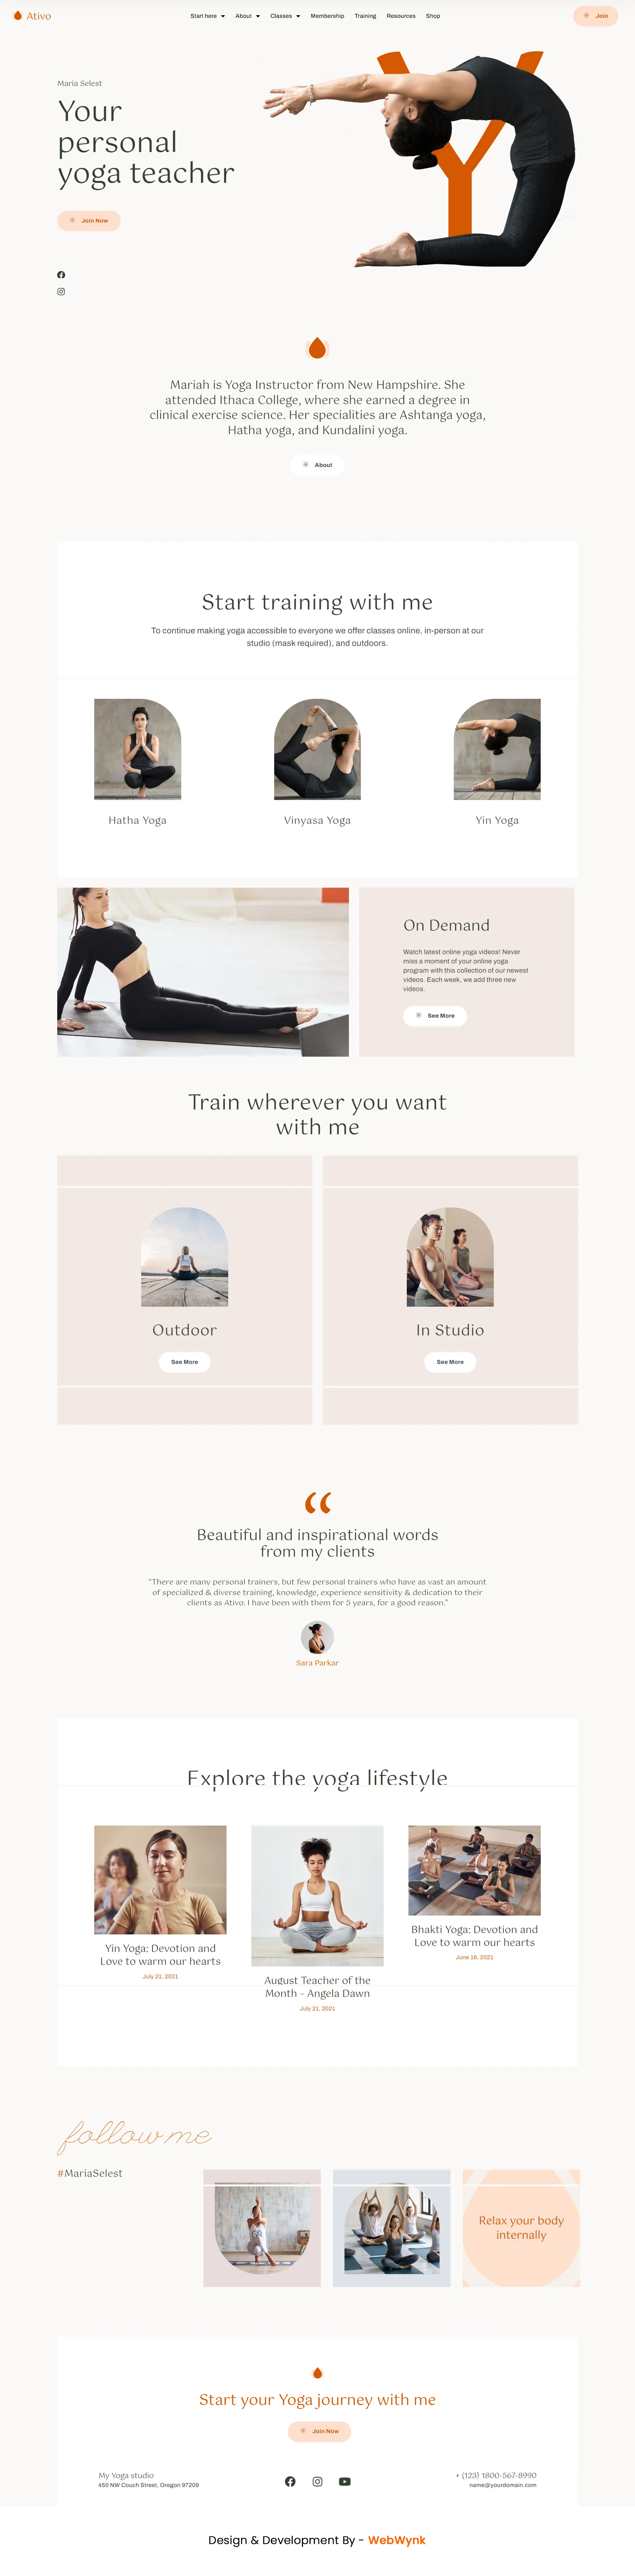 yoga-teacher-fitness-website-design-&-development-webwynk